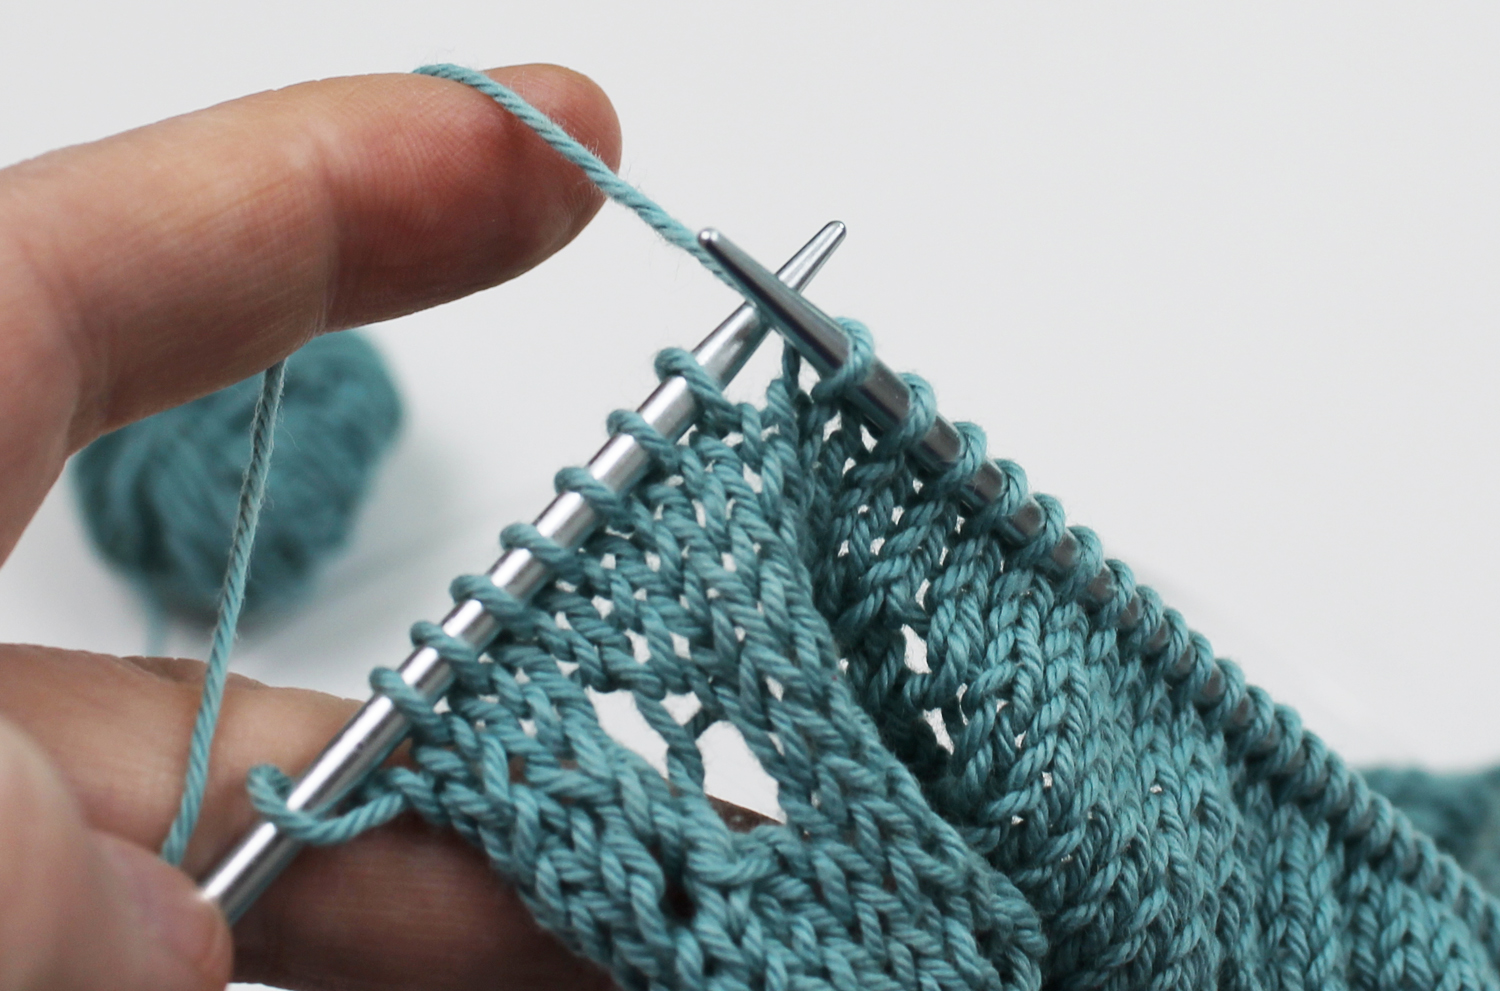 Tinking knit stitches